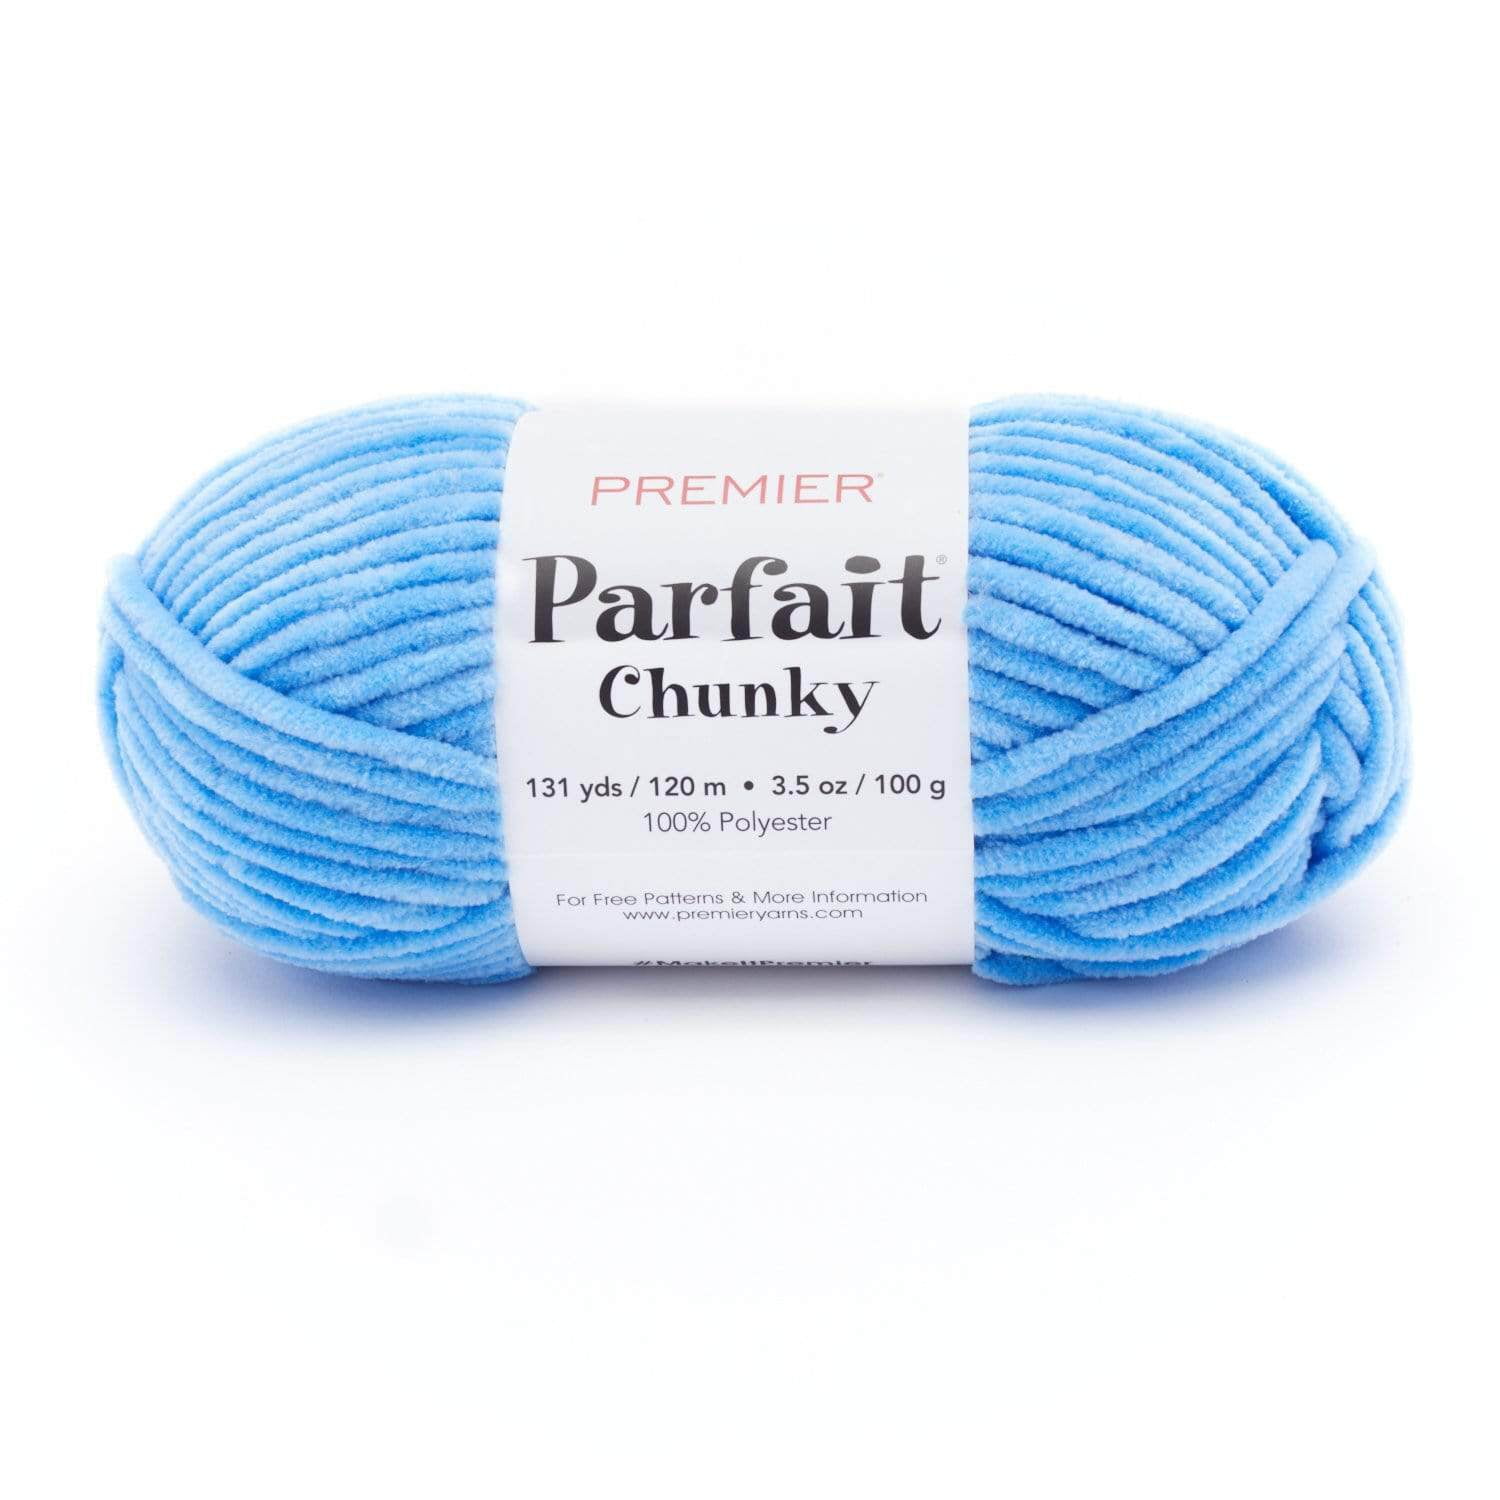 Premier Parfait Chunky Yarn-Light Blue, 1 - Kroger